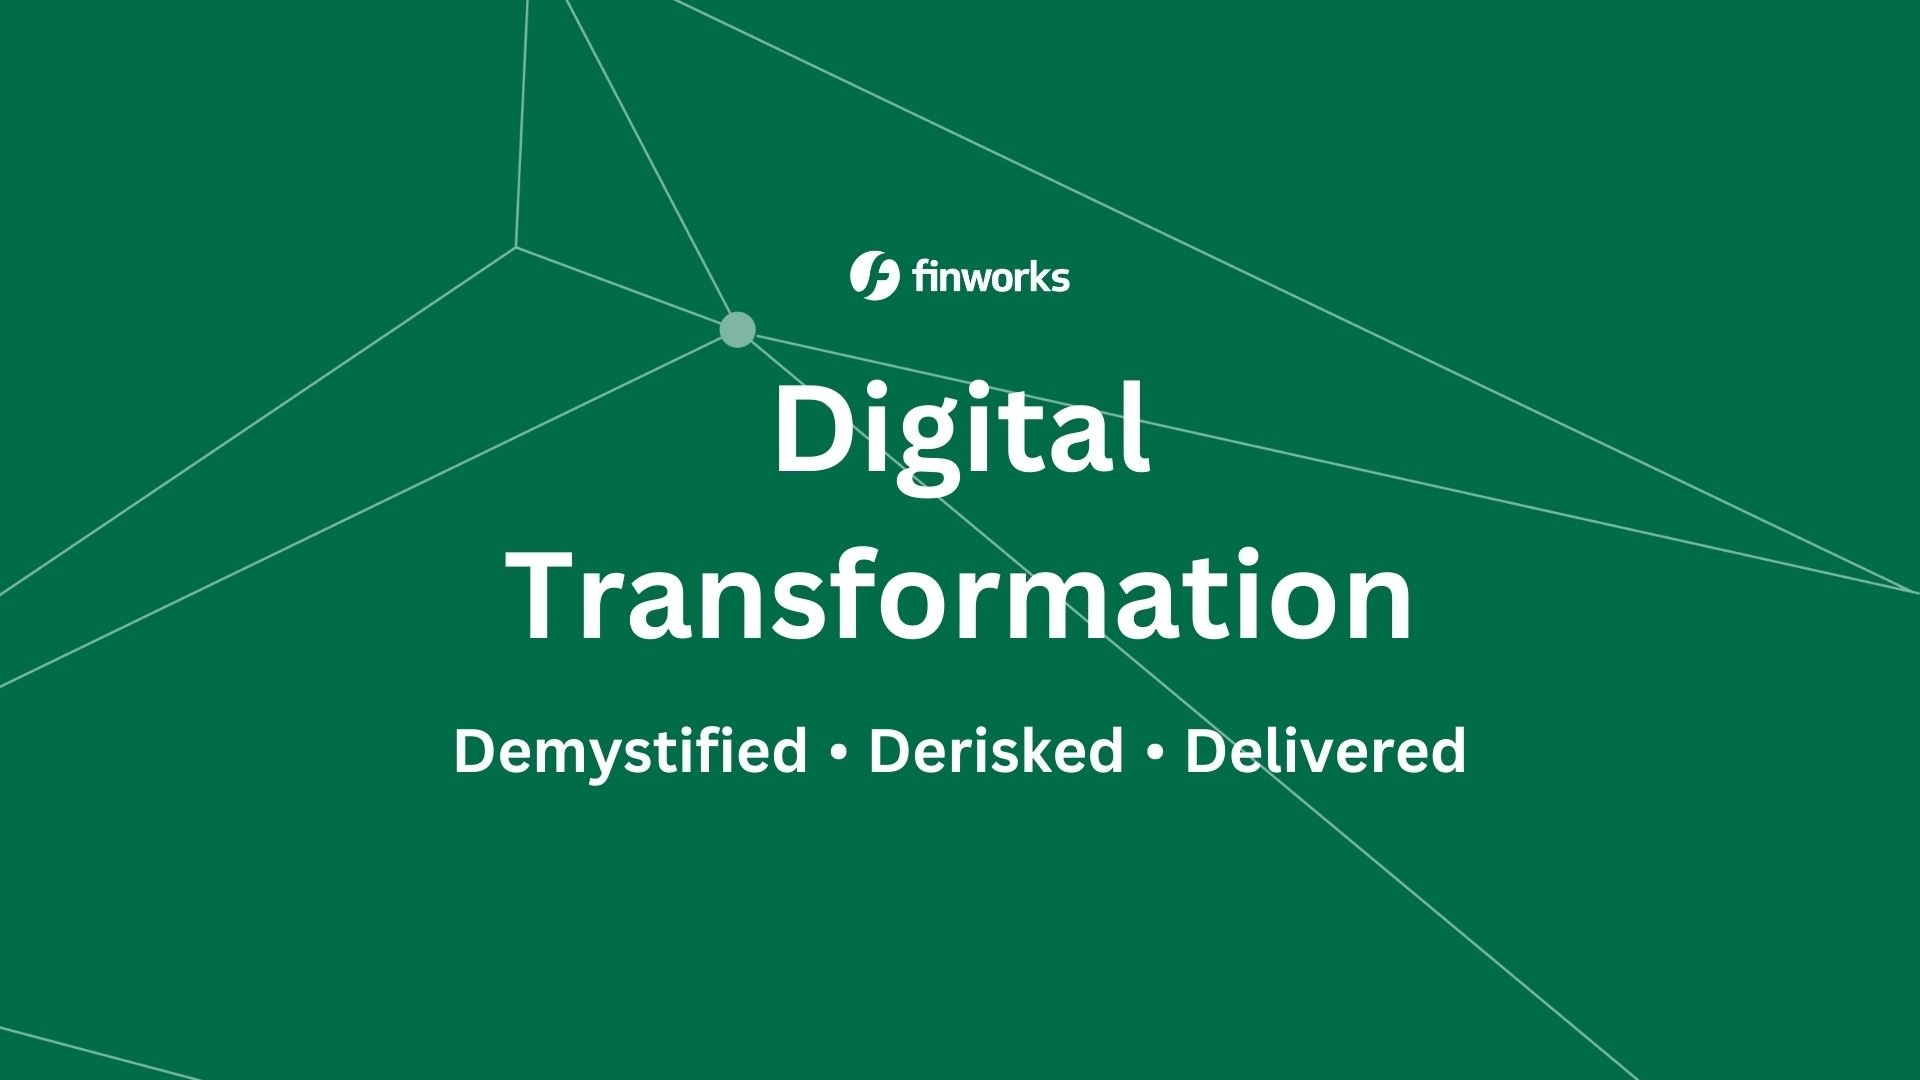 How digital ecosystems make sense talking about digital transformation